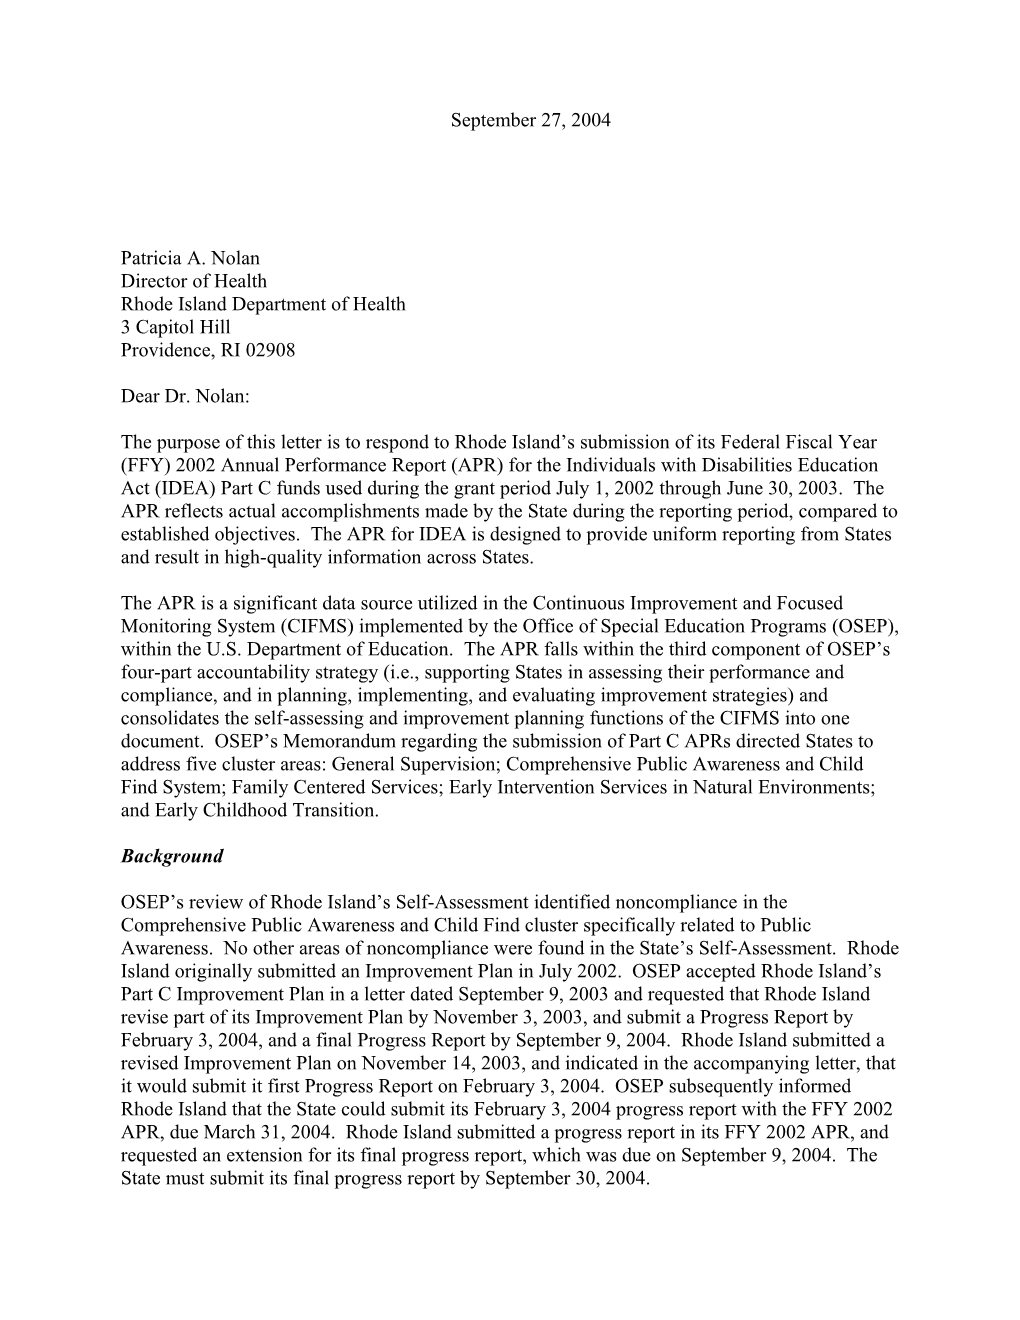 Rhode Island Part C APR Letter, 2002-2003 (MS Word)